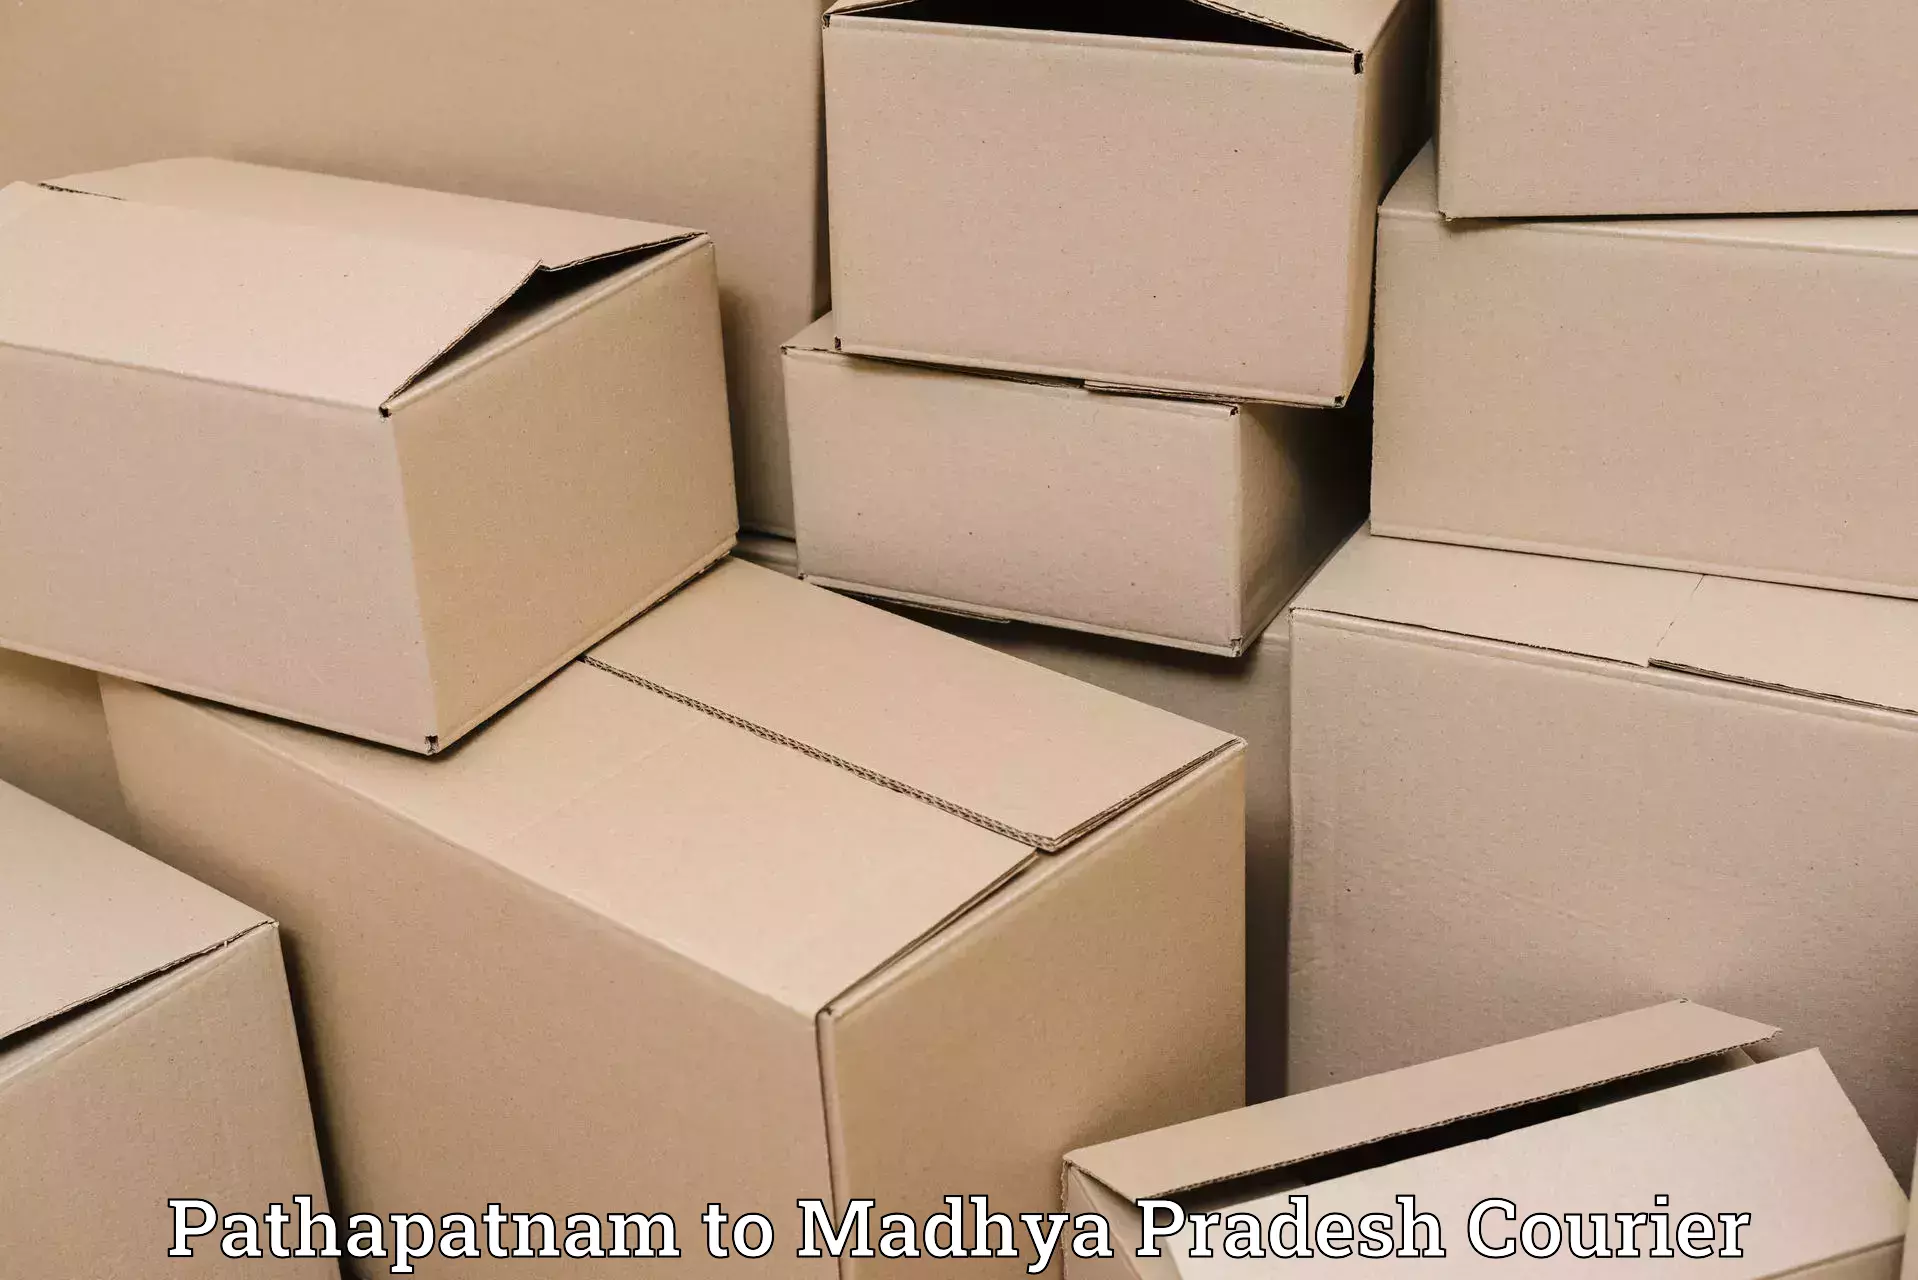 Expedited shipping methods Pathapatnam to Nagda